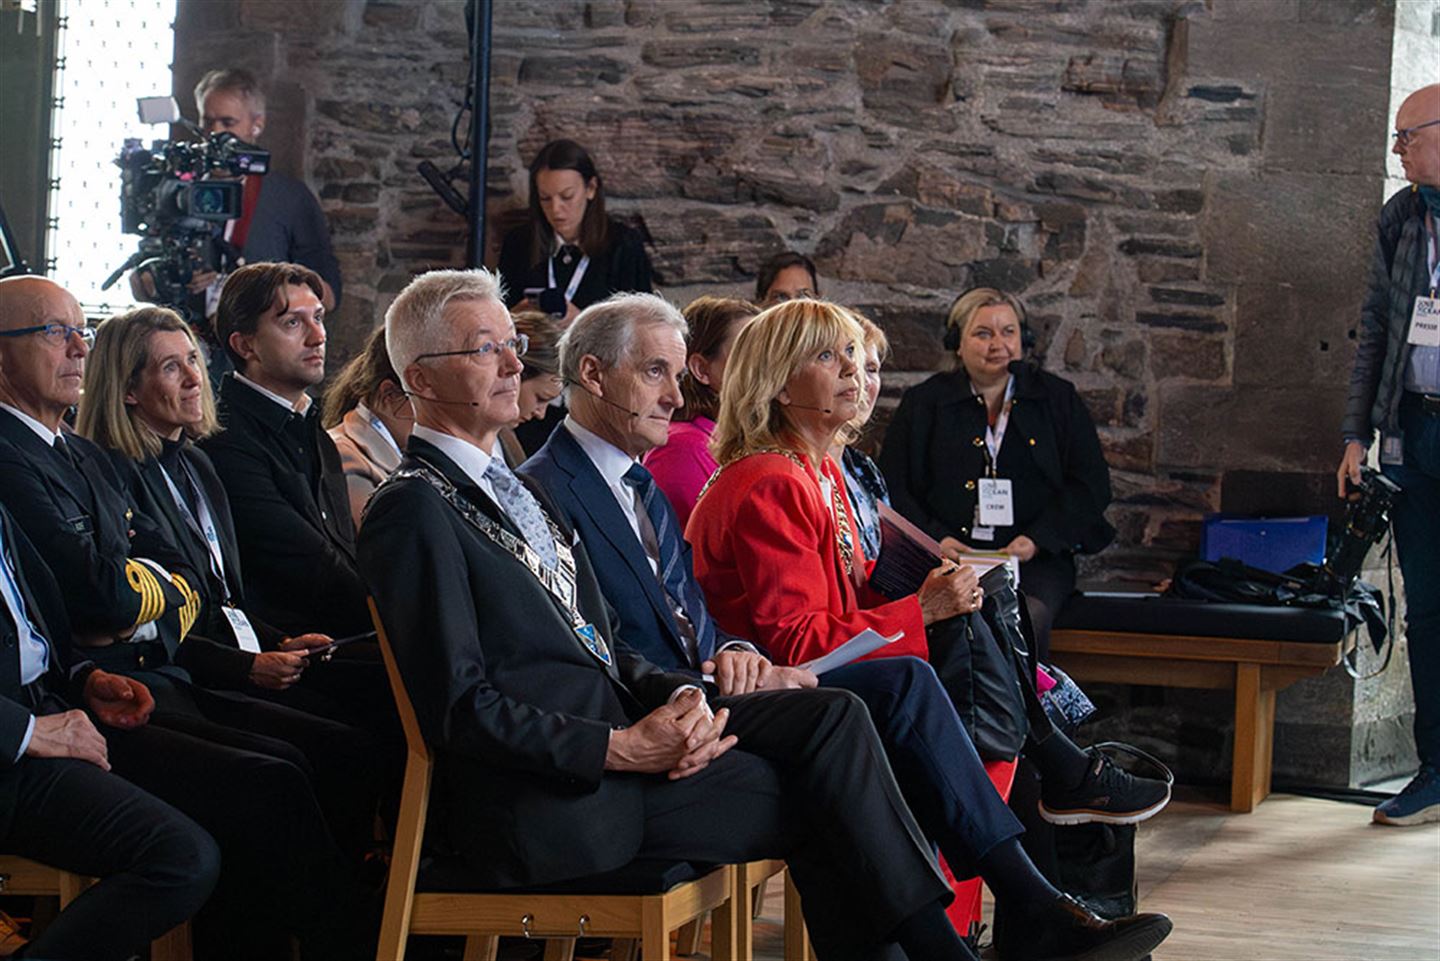 Fylkesordførar Jon Askeland, statsminister Jonas Gahr Støre og ordførar i Bergen, Marit Warncke på første rad under One Ocean Summit i Håkonshallen.